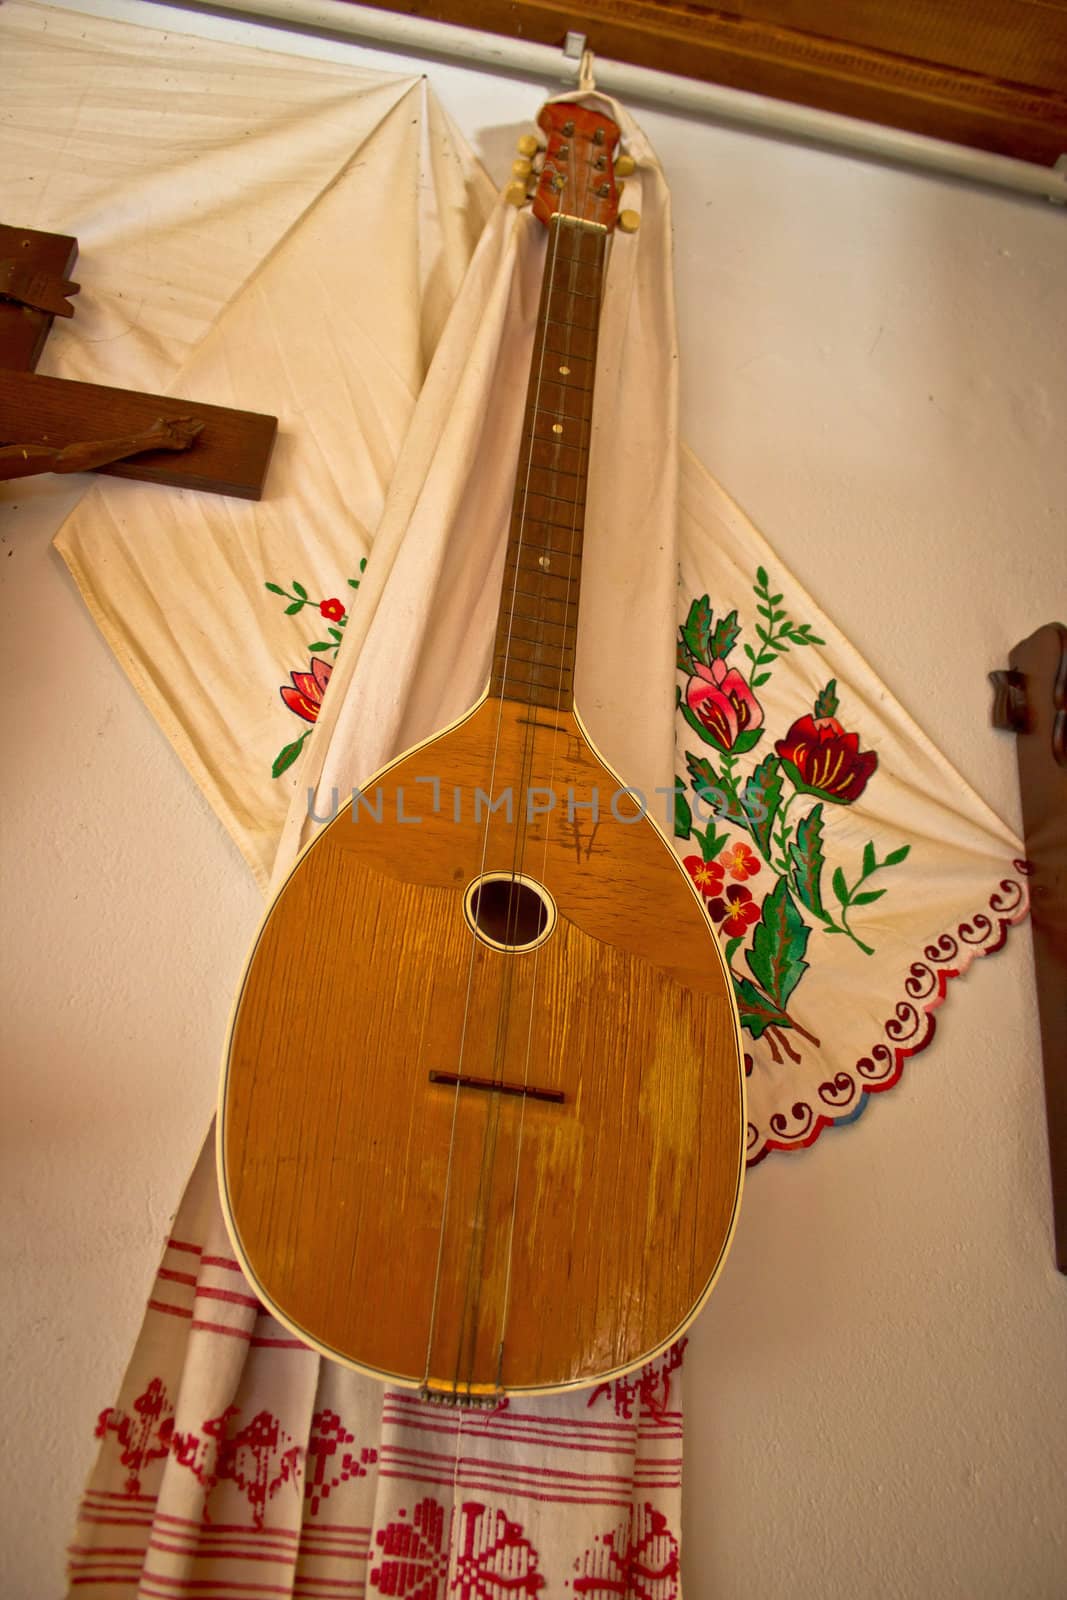 Tamburica - Croatian traditional music instrument by xbrchx